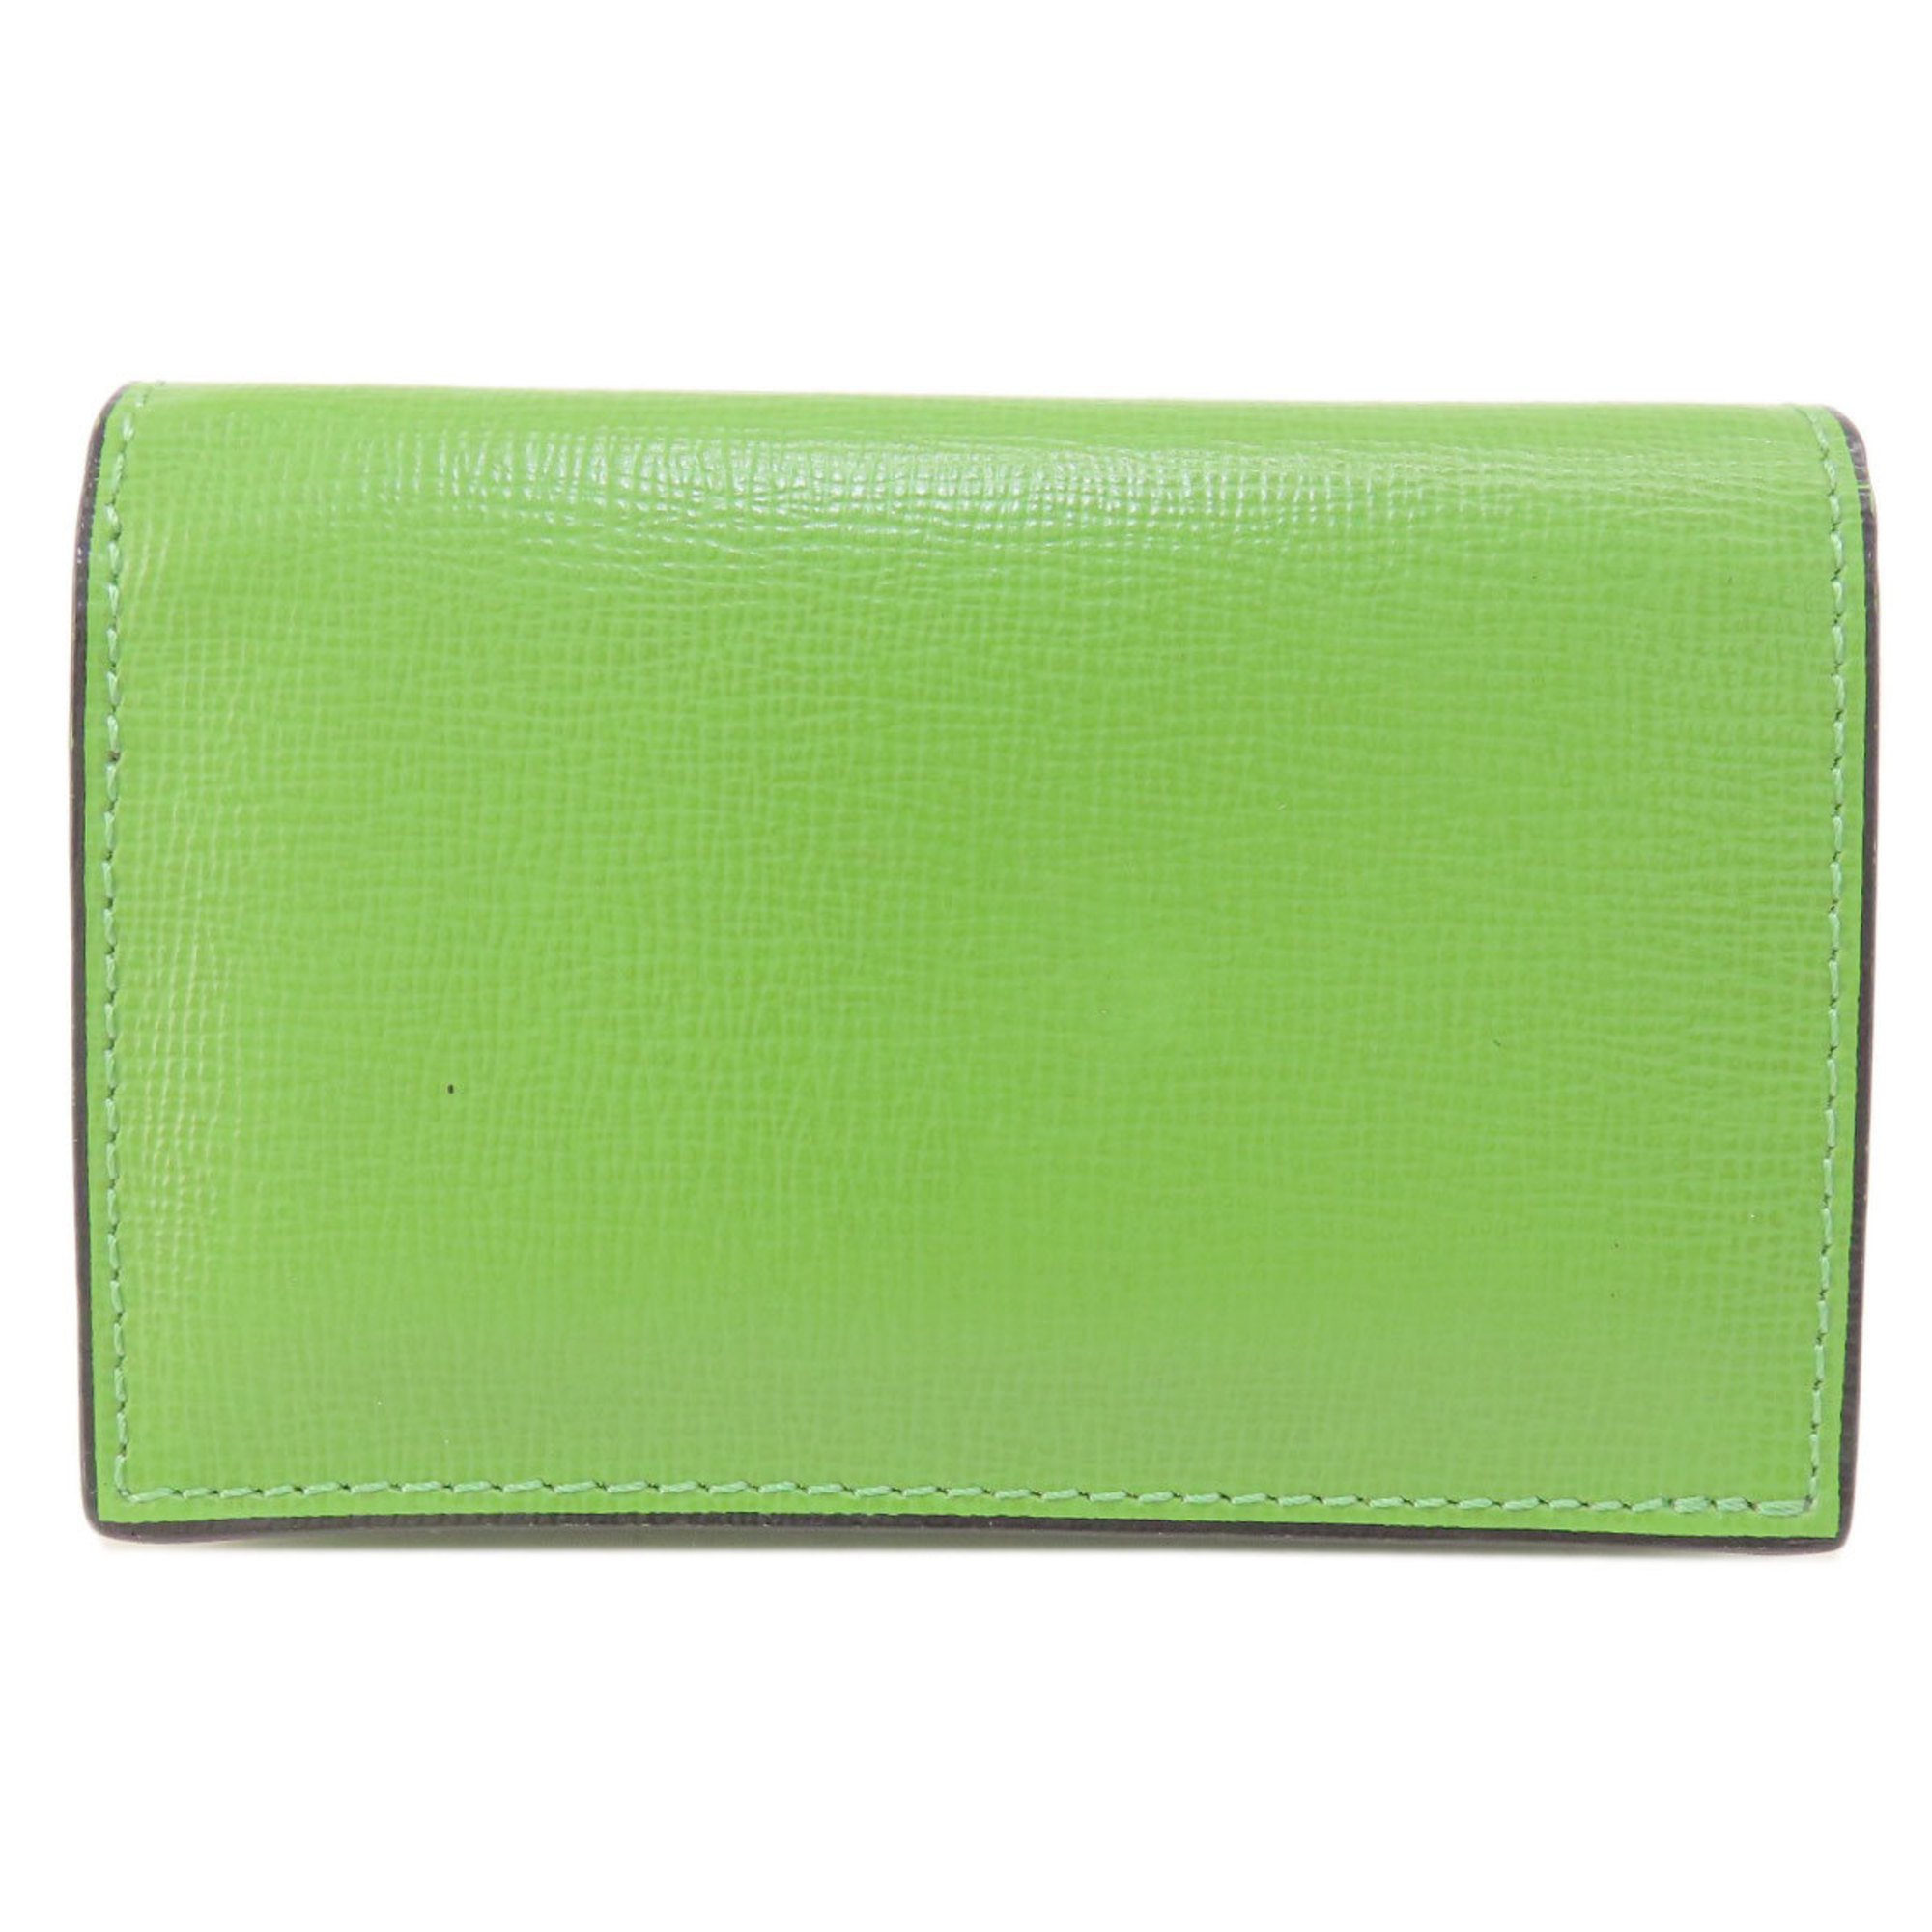 Valextra Design Business Card Holder/Card Case Leather Women's